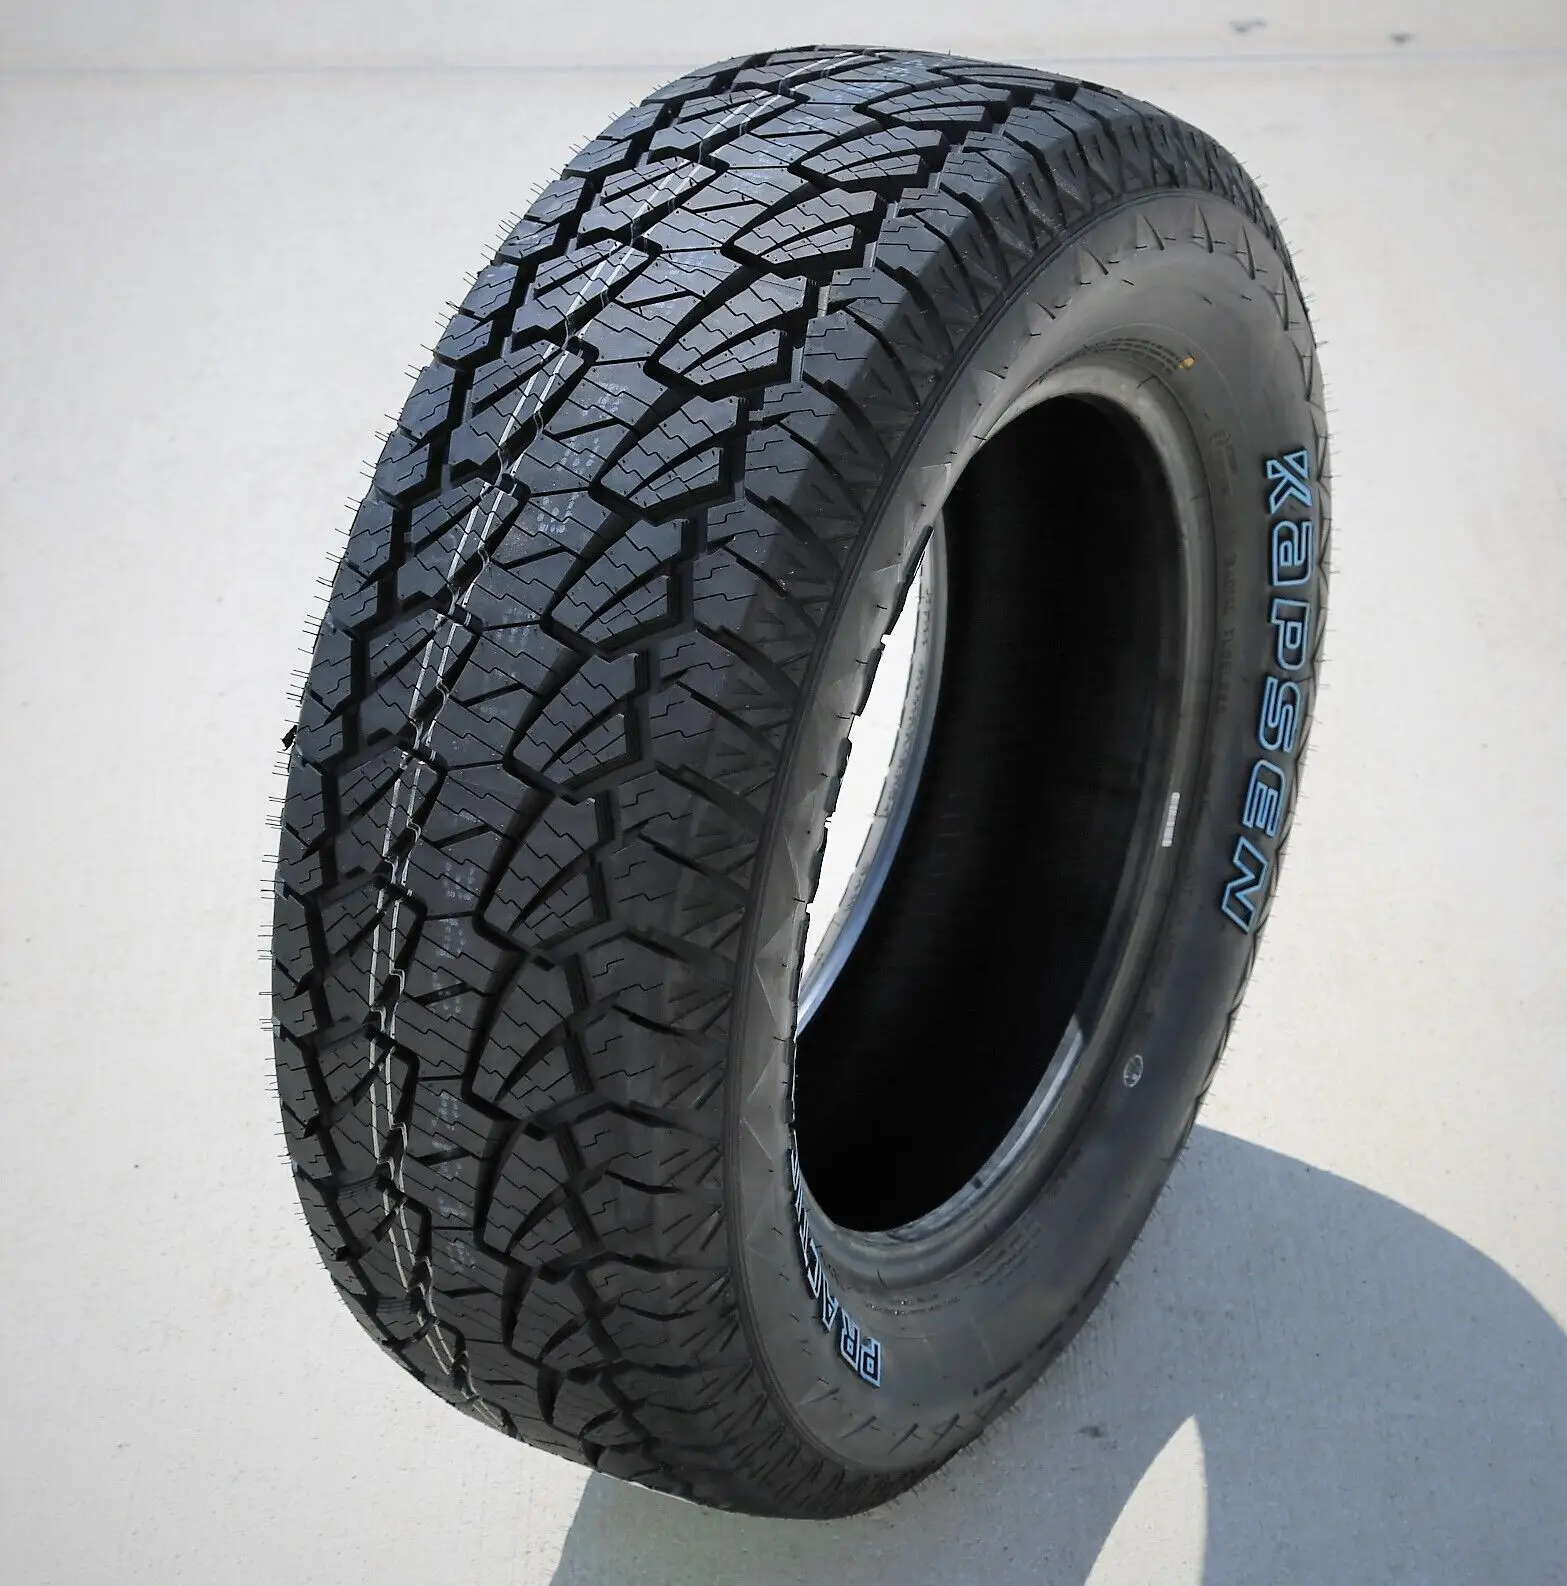 Source winter tyres for car habilead 225 45 17 245 40 r18 kapsen